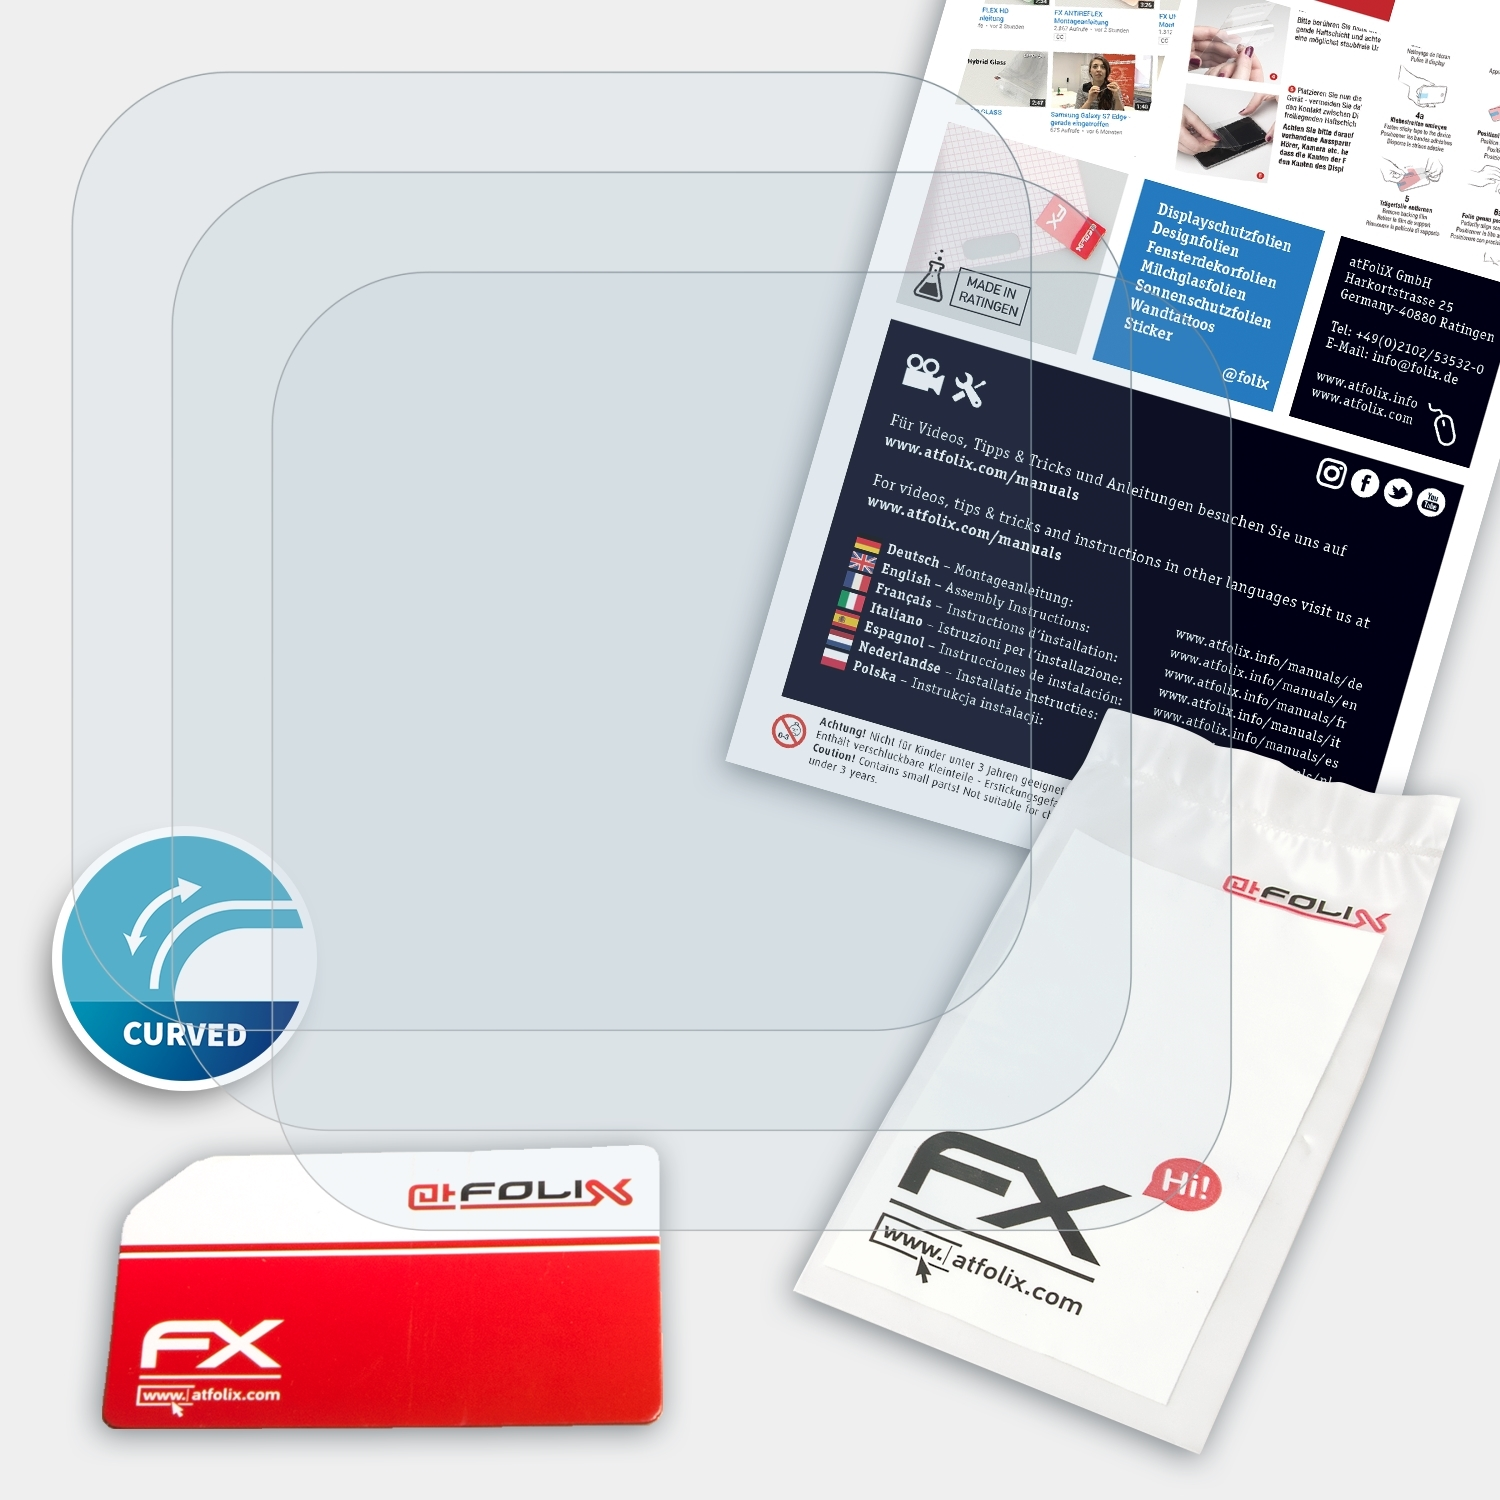 ATFOLIX 3x FX-ActiFleX Displayschutz(für 3) Garmin Vivofit